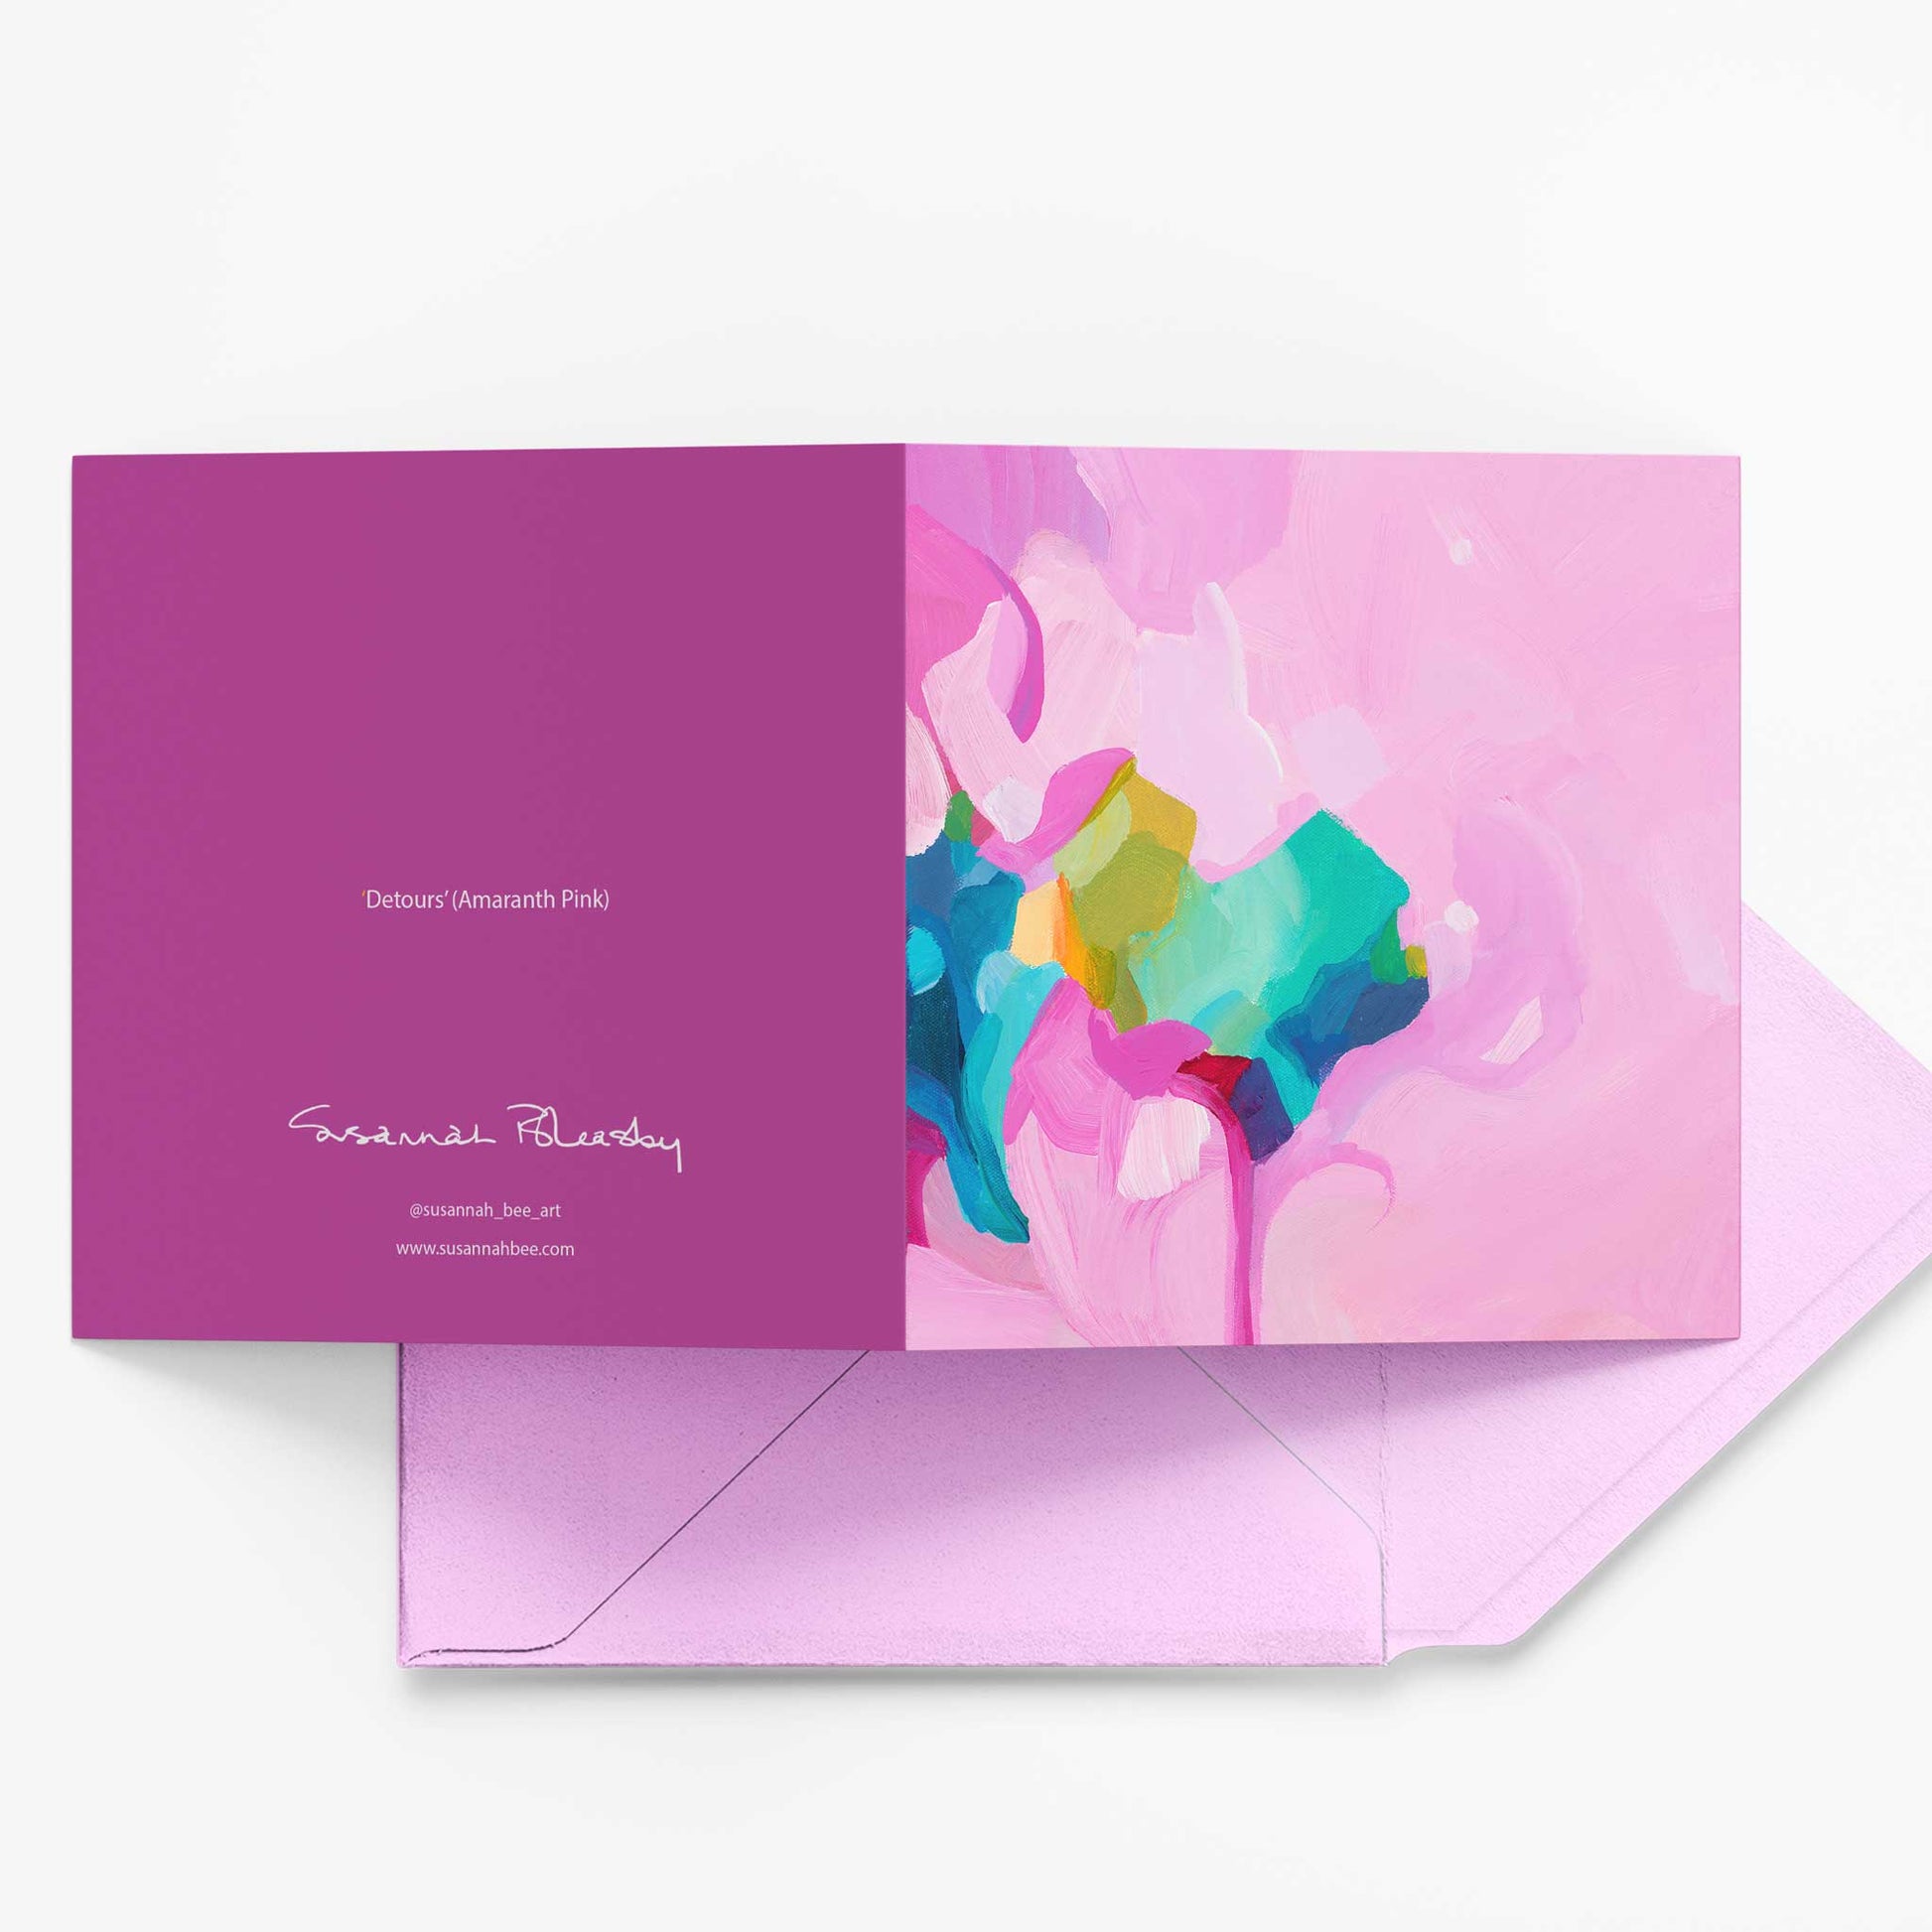 amaranth pink abstract greeting card UK with matching pink envelope